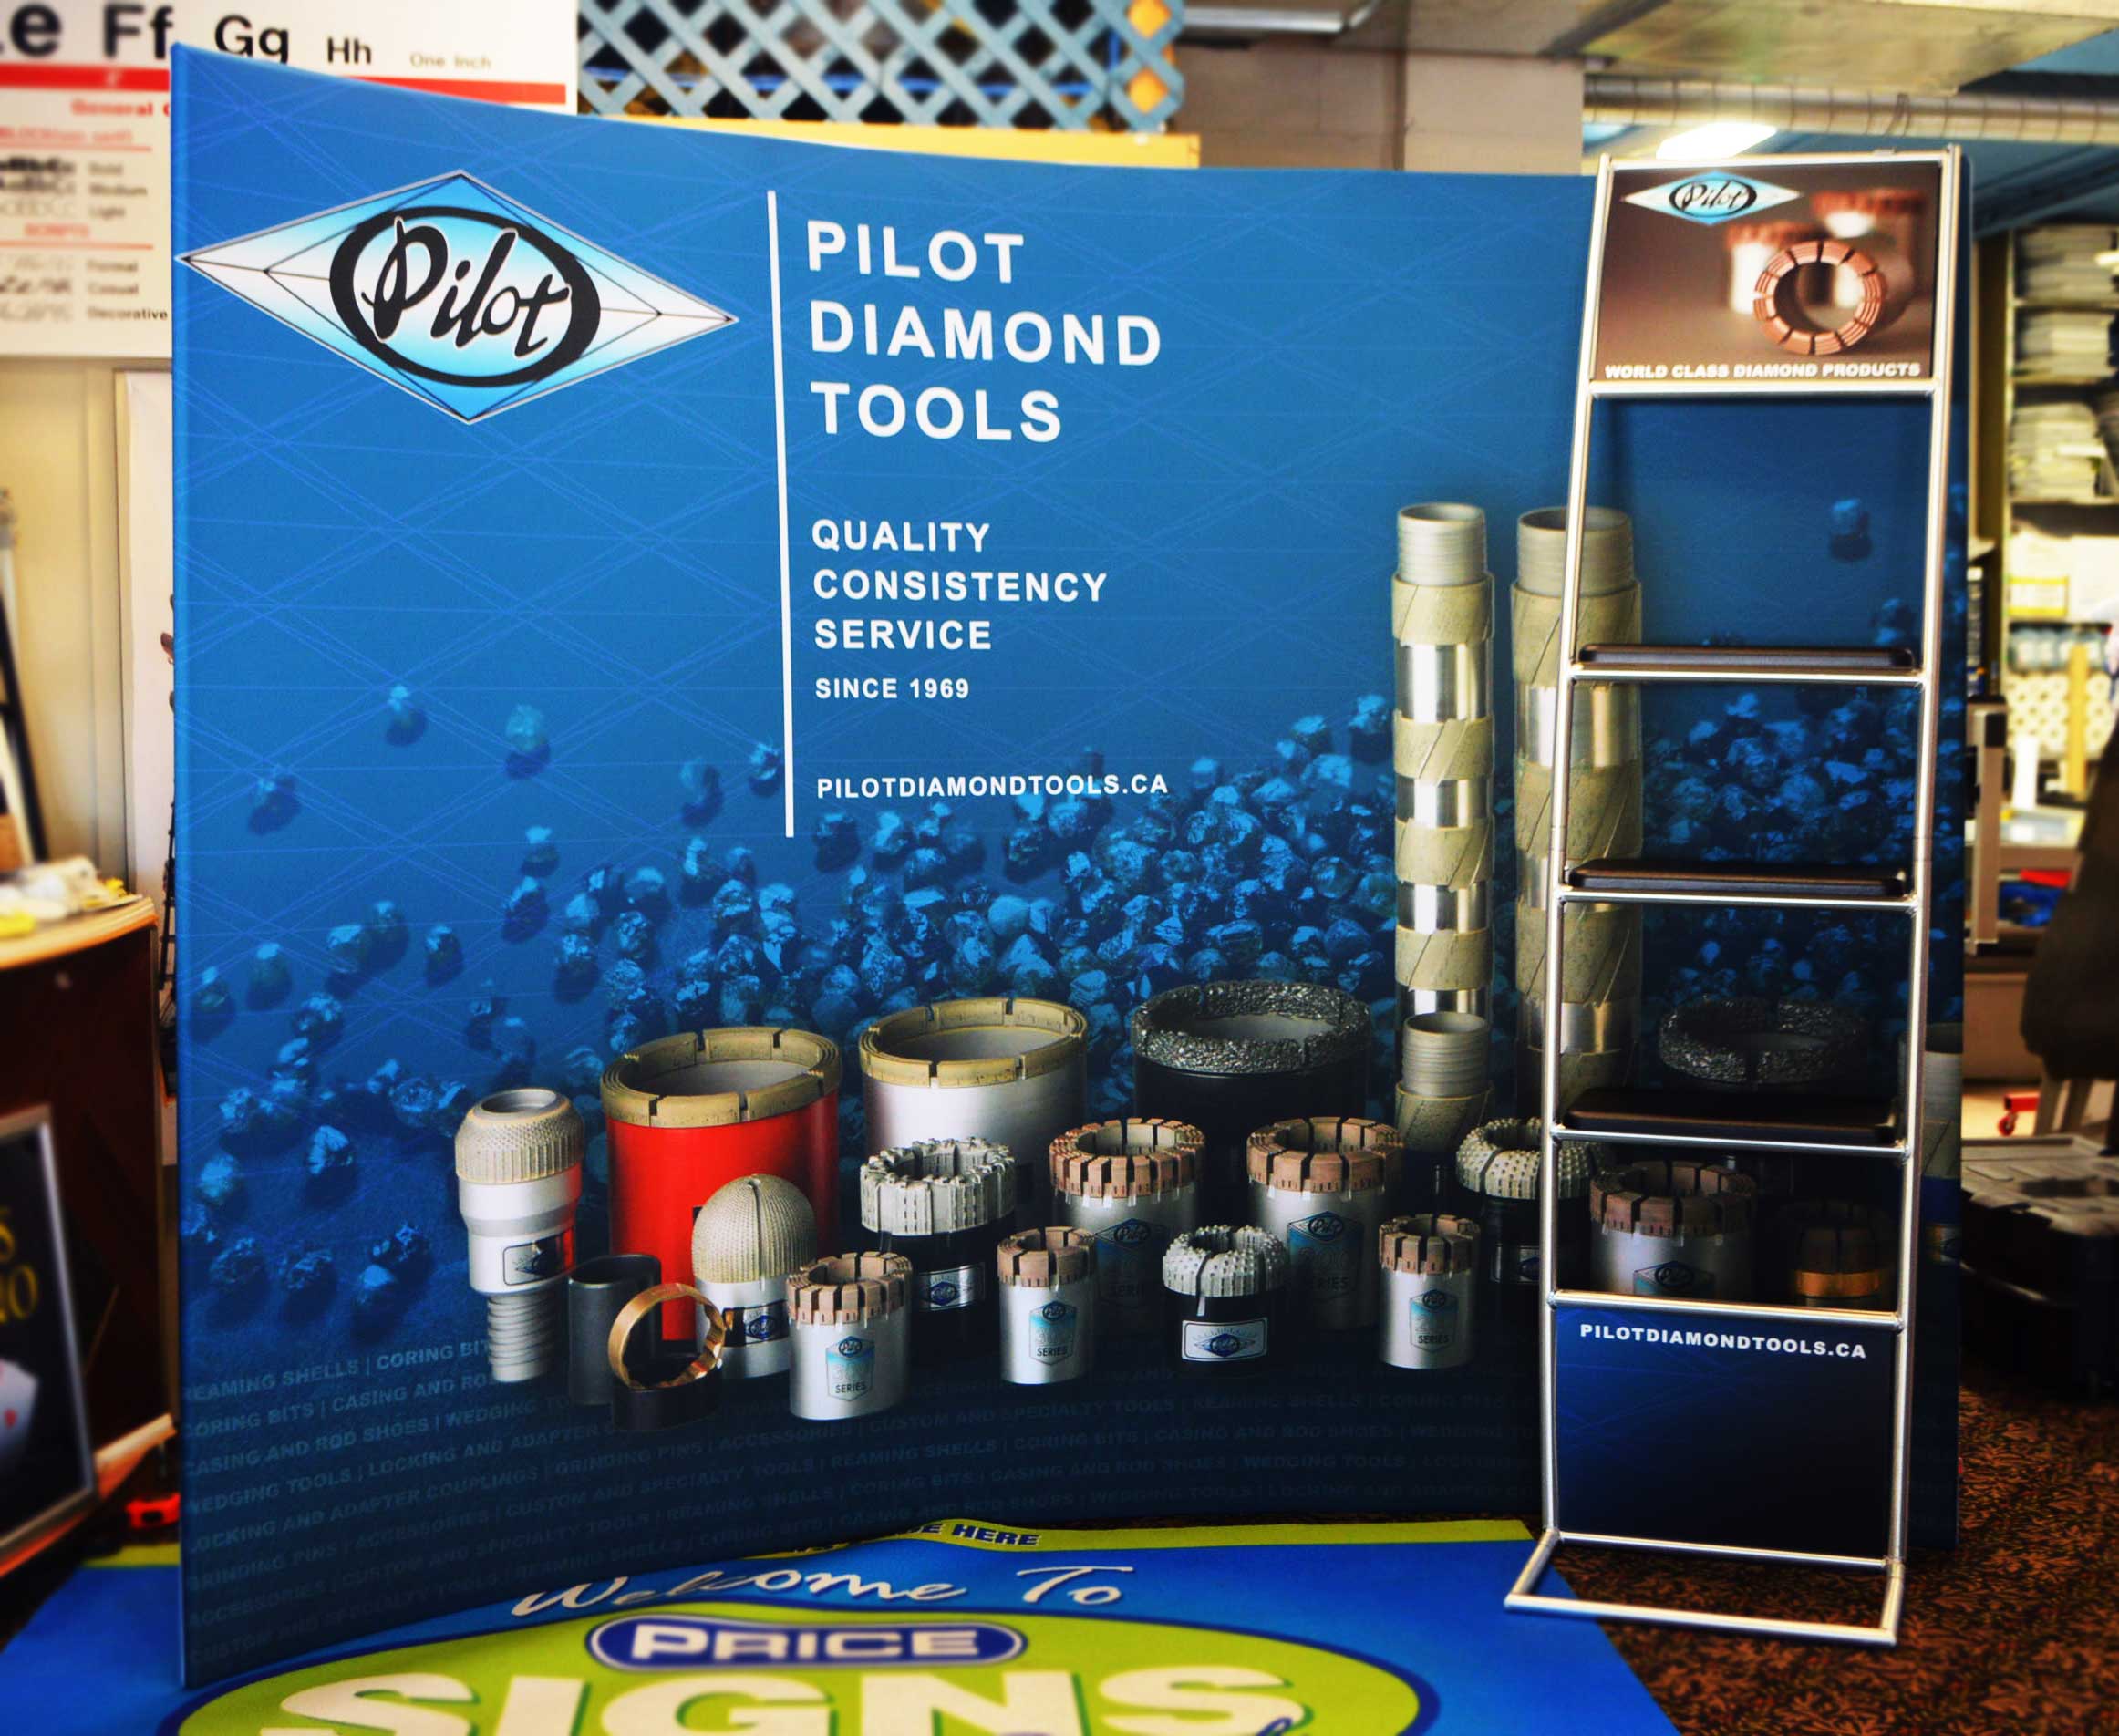 Pilot Diamond Tools - Trade Show Display Back Wall Stand